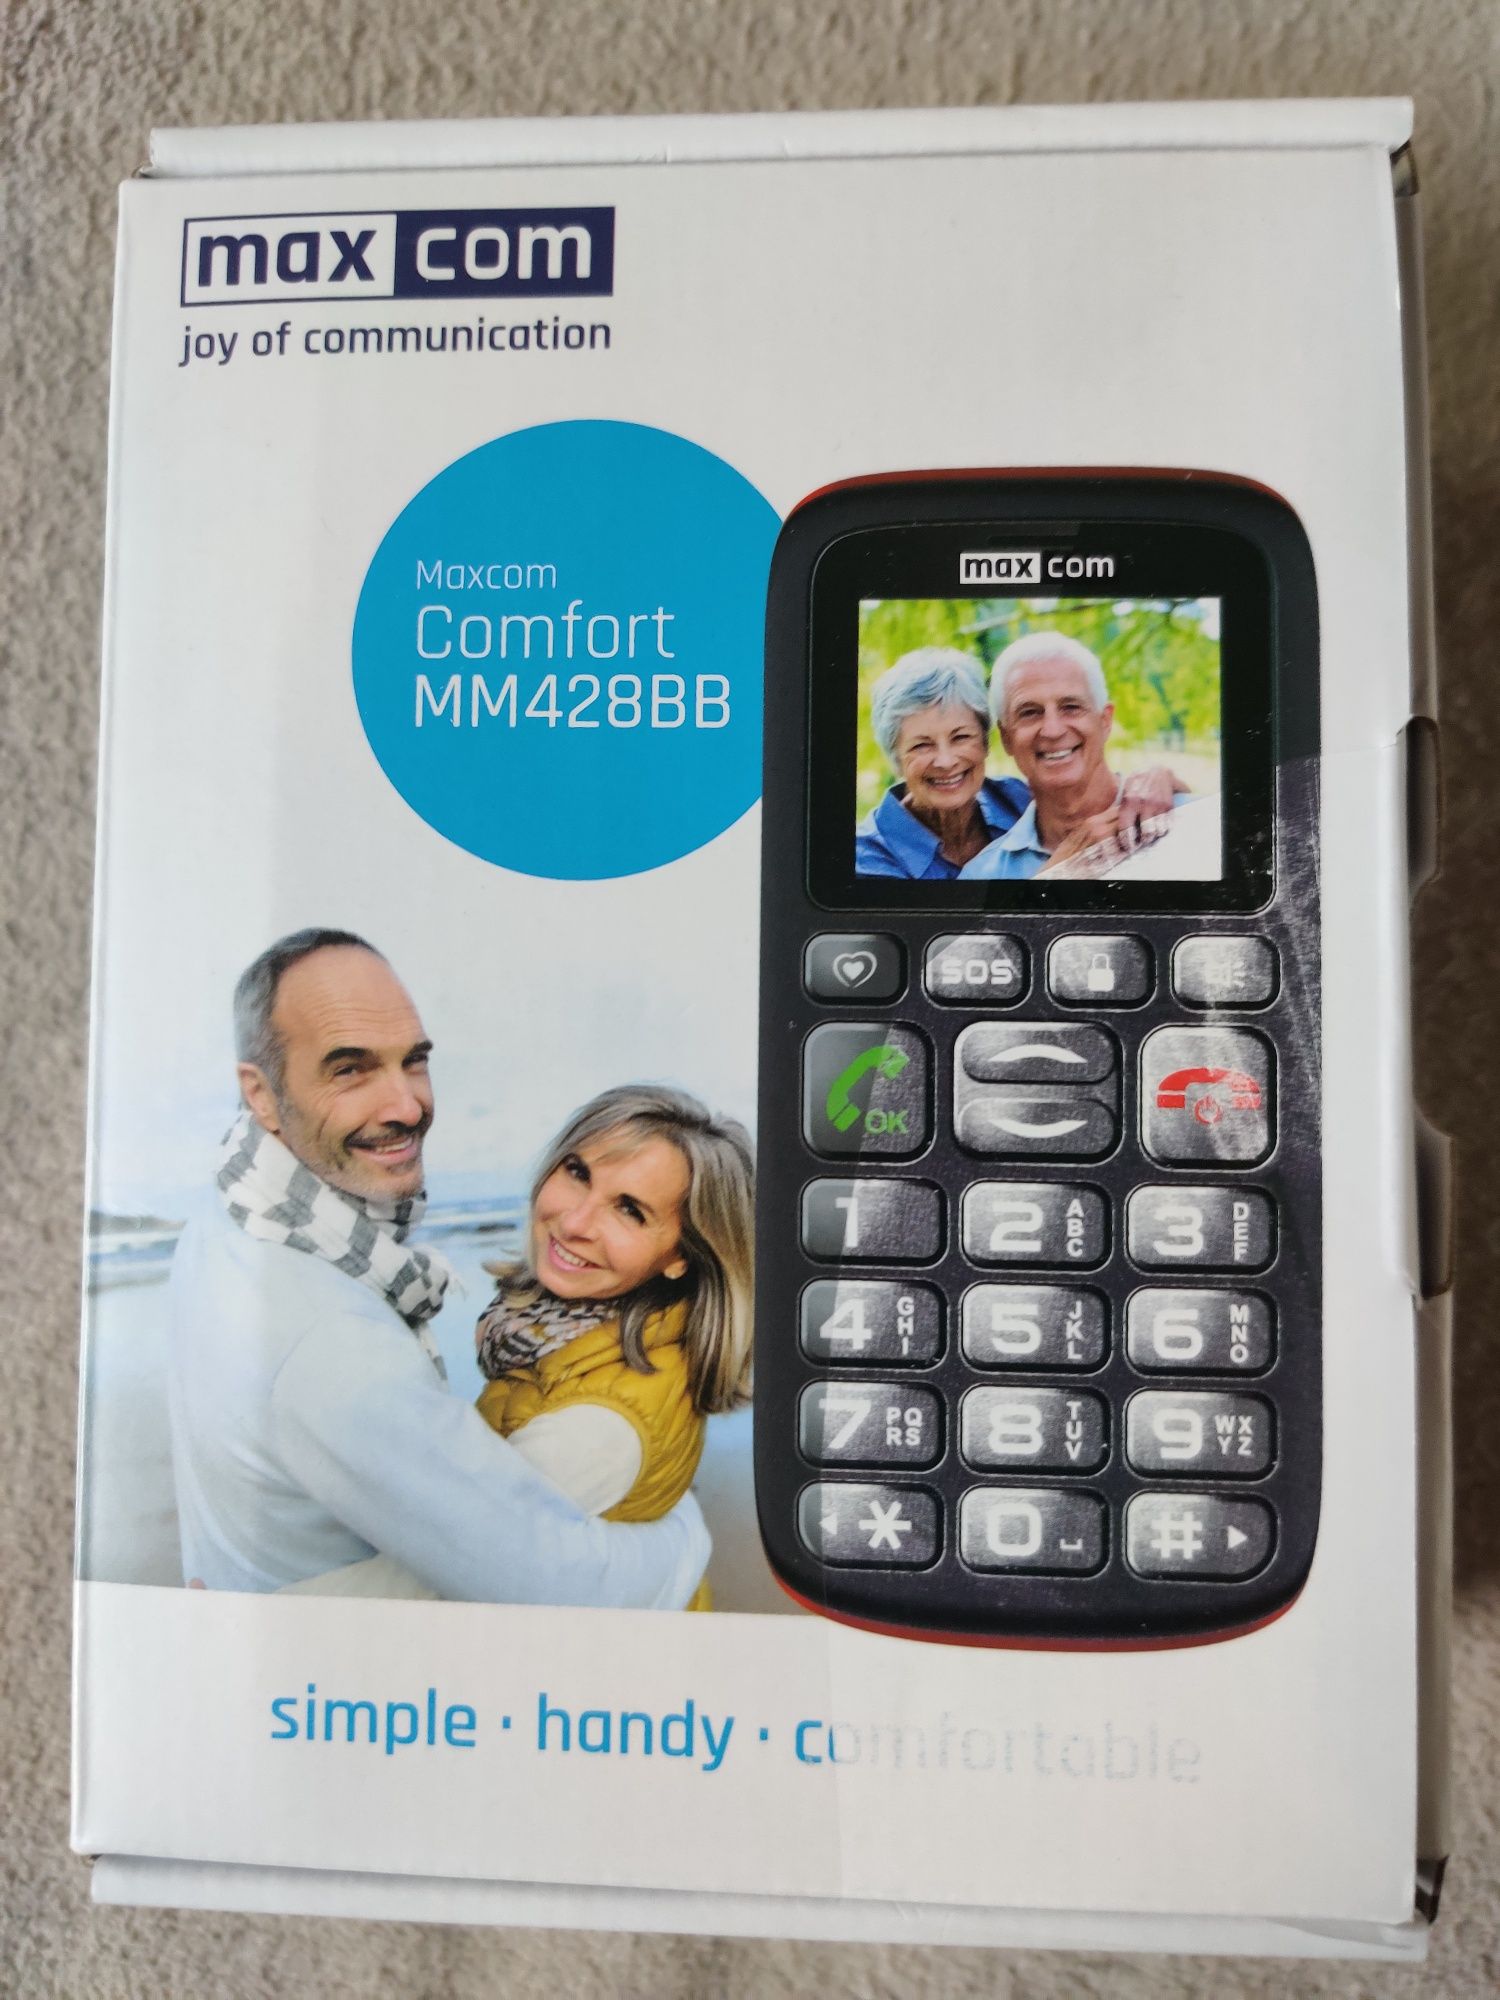 Telefon max com . nu a fost folosit deloc !